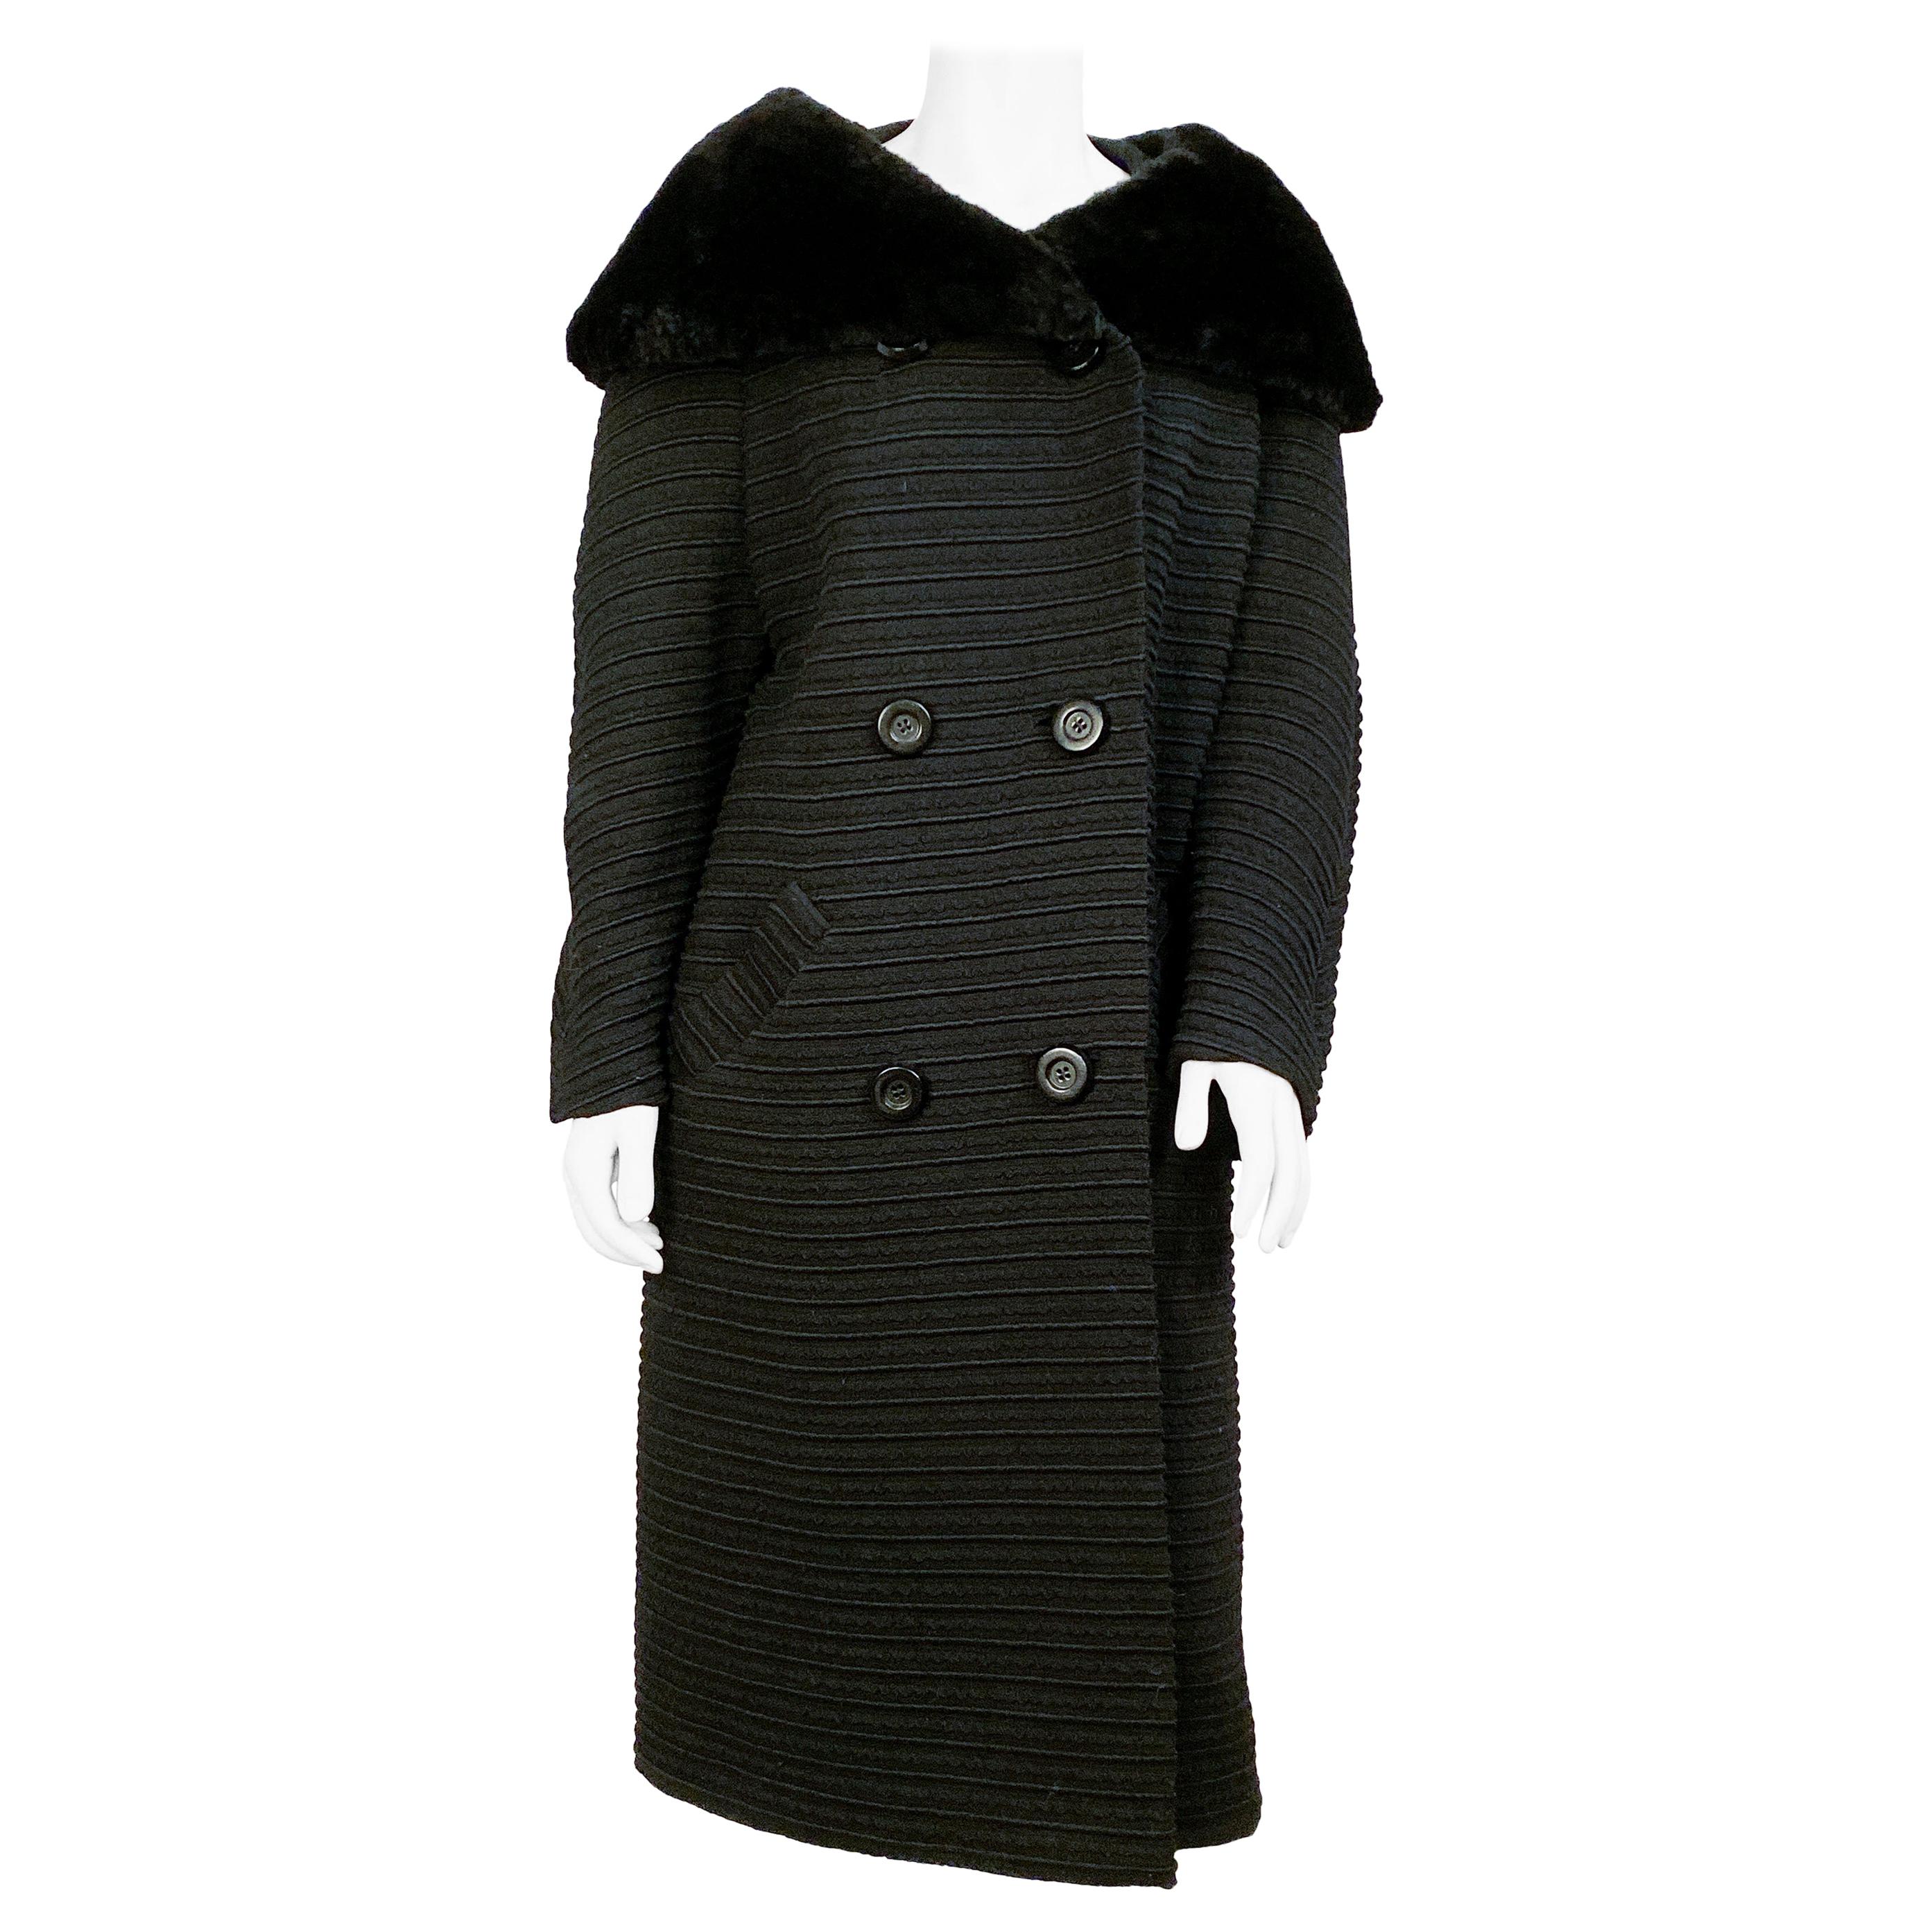 1960s Black Textured Wool Coat with Fur Collar